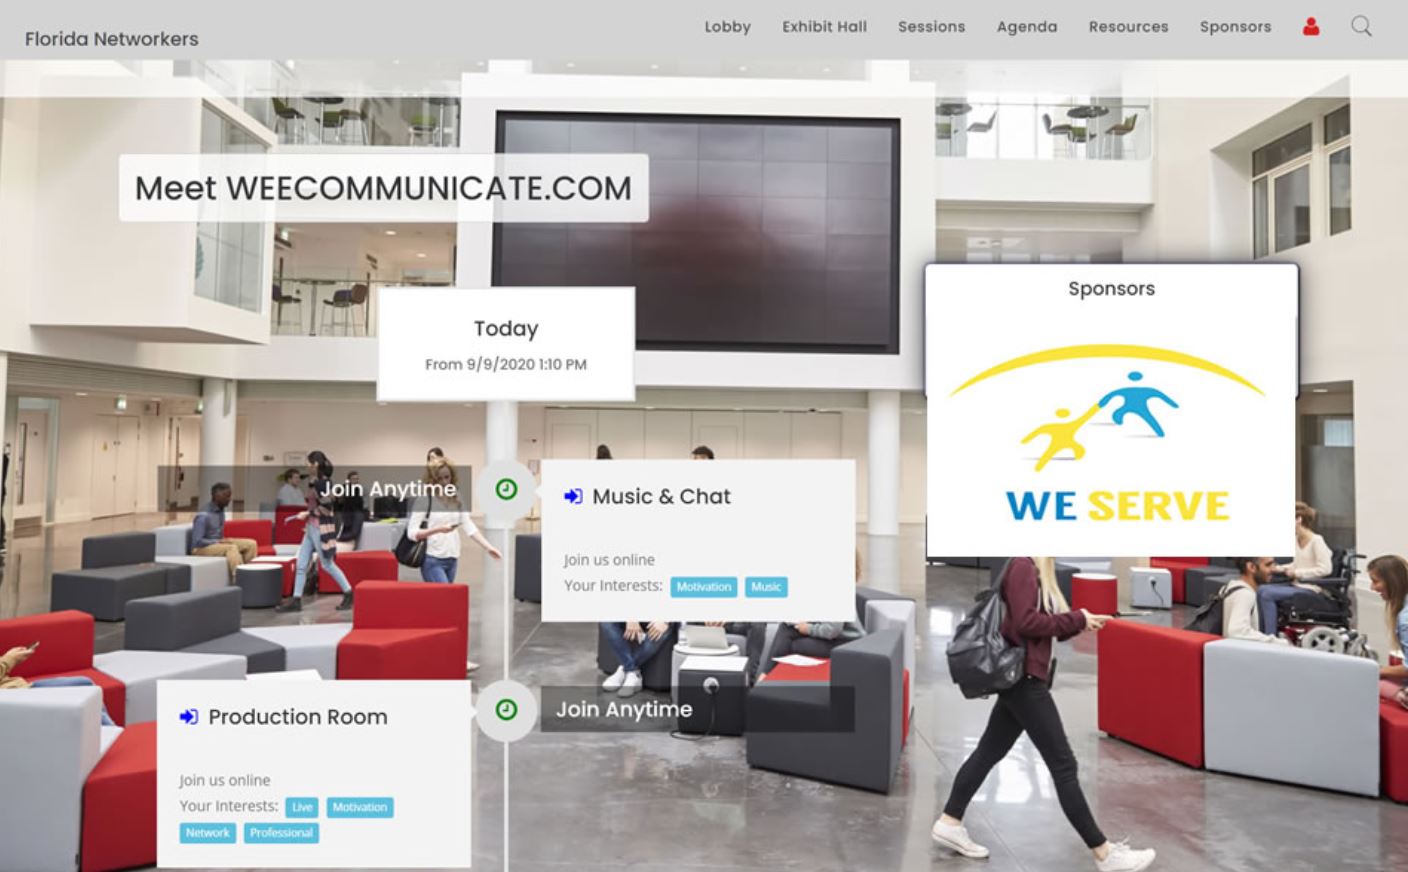 WEEcommunicate.com virtual lobby